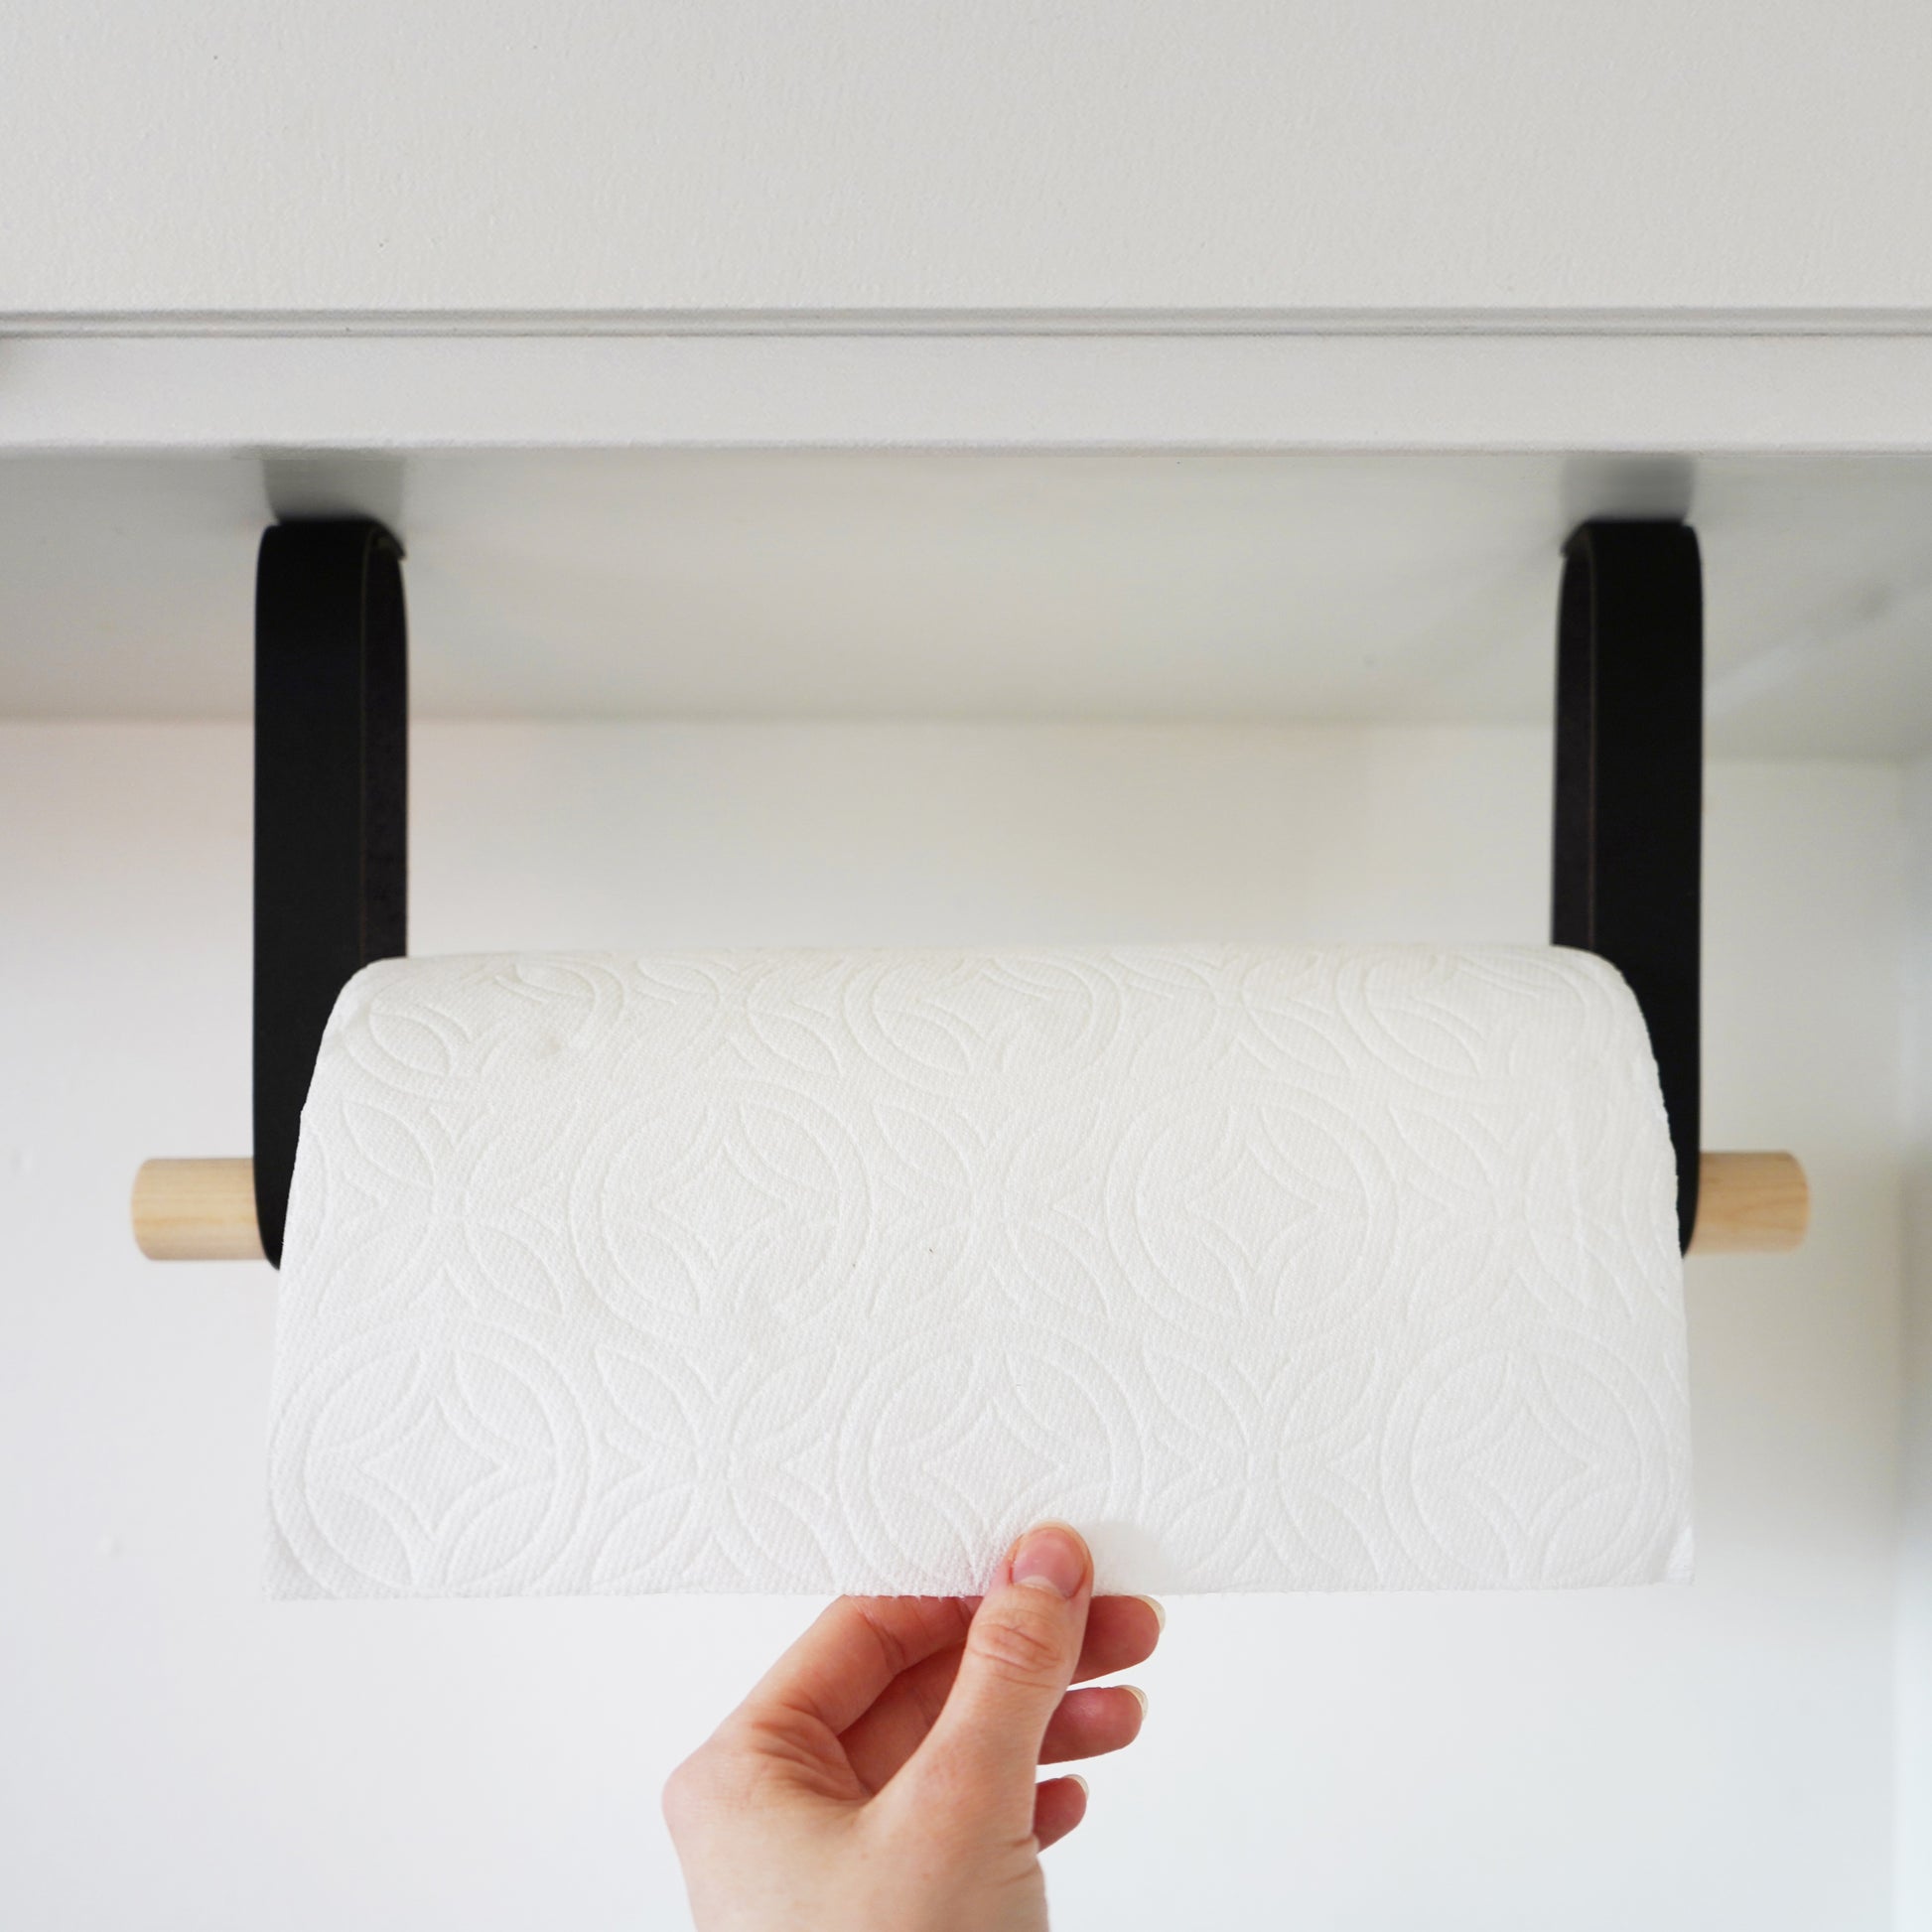 Paper Towel Holder - Under Cabinet or Wall Mount